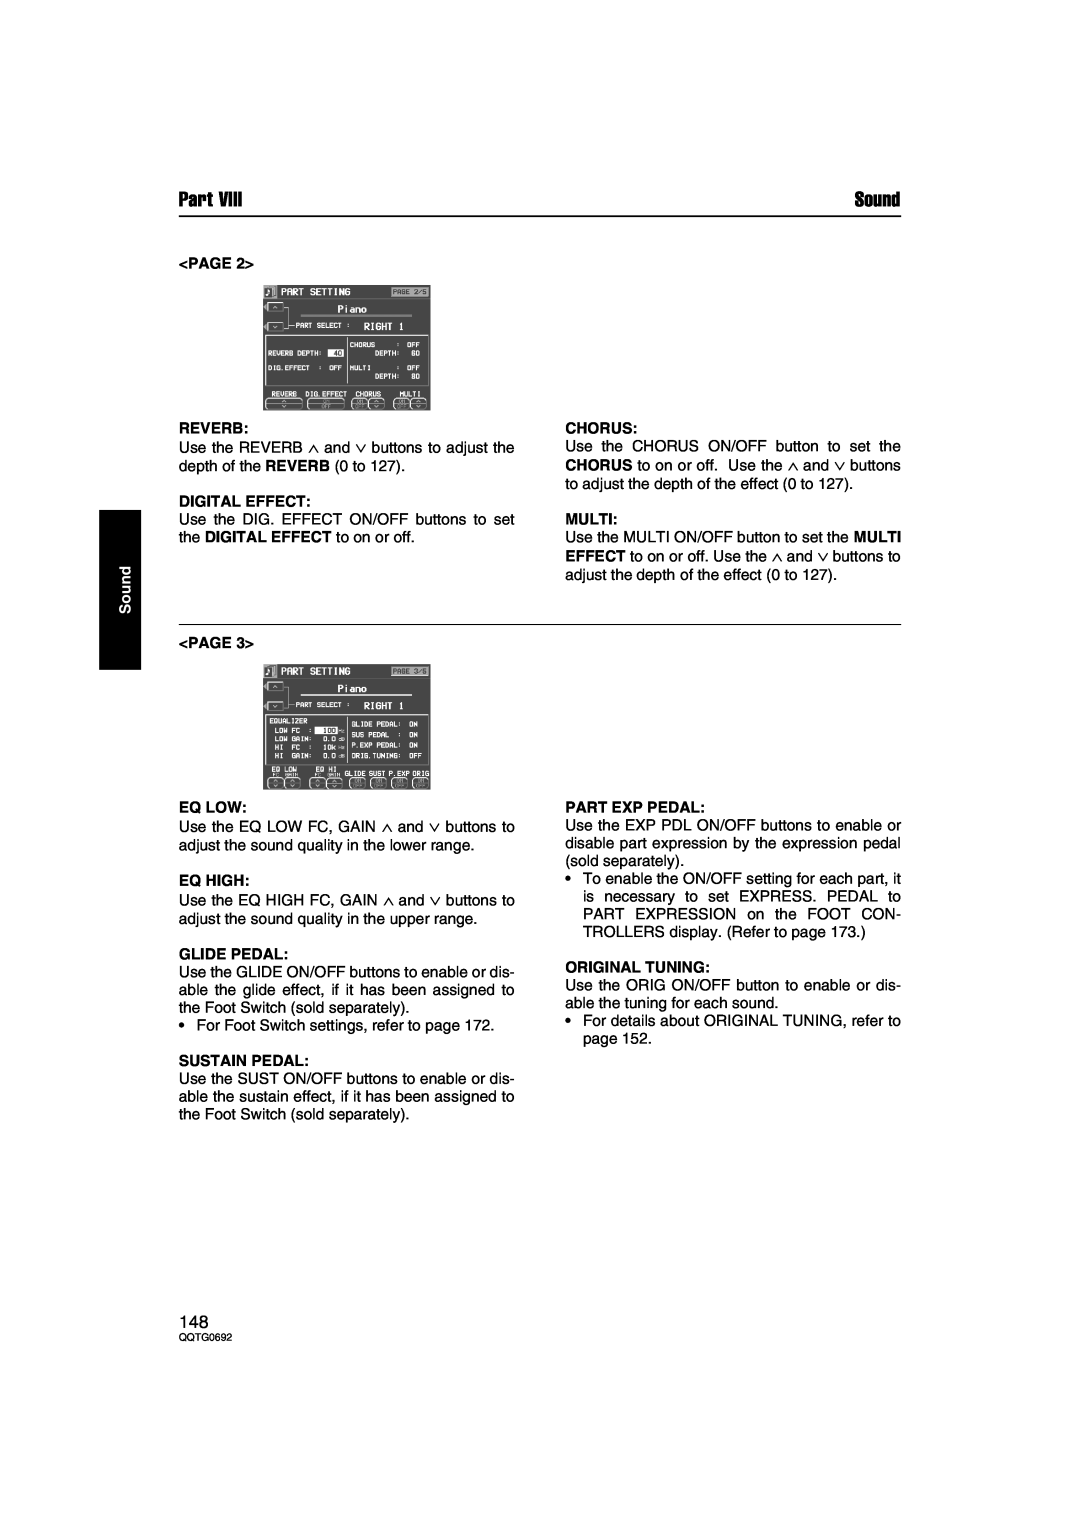 Panasonic SX-KN2600 Page Reverb, Digital Effect, Chorus, Multi, Page Eq Low, Eq High, Glide Pedal, Sustain Pedal, Part 